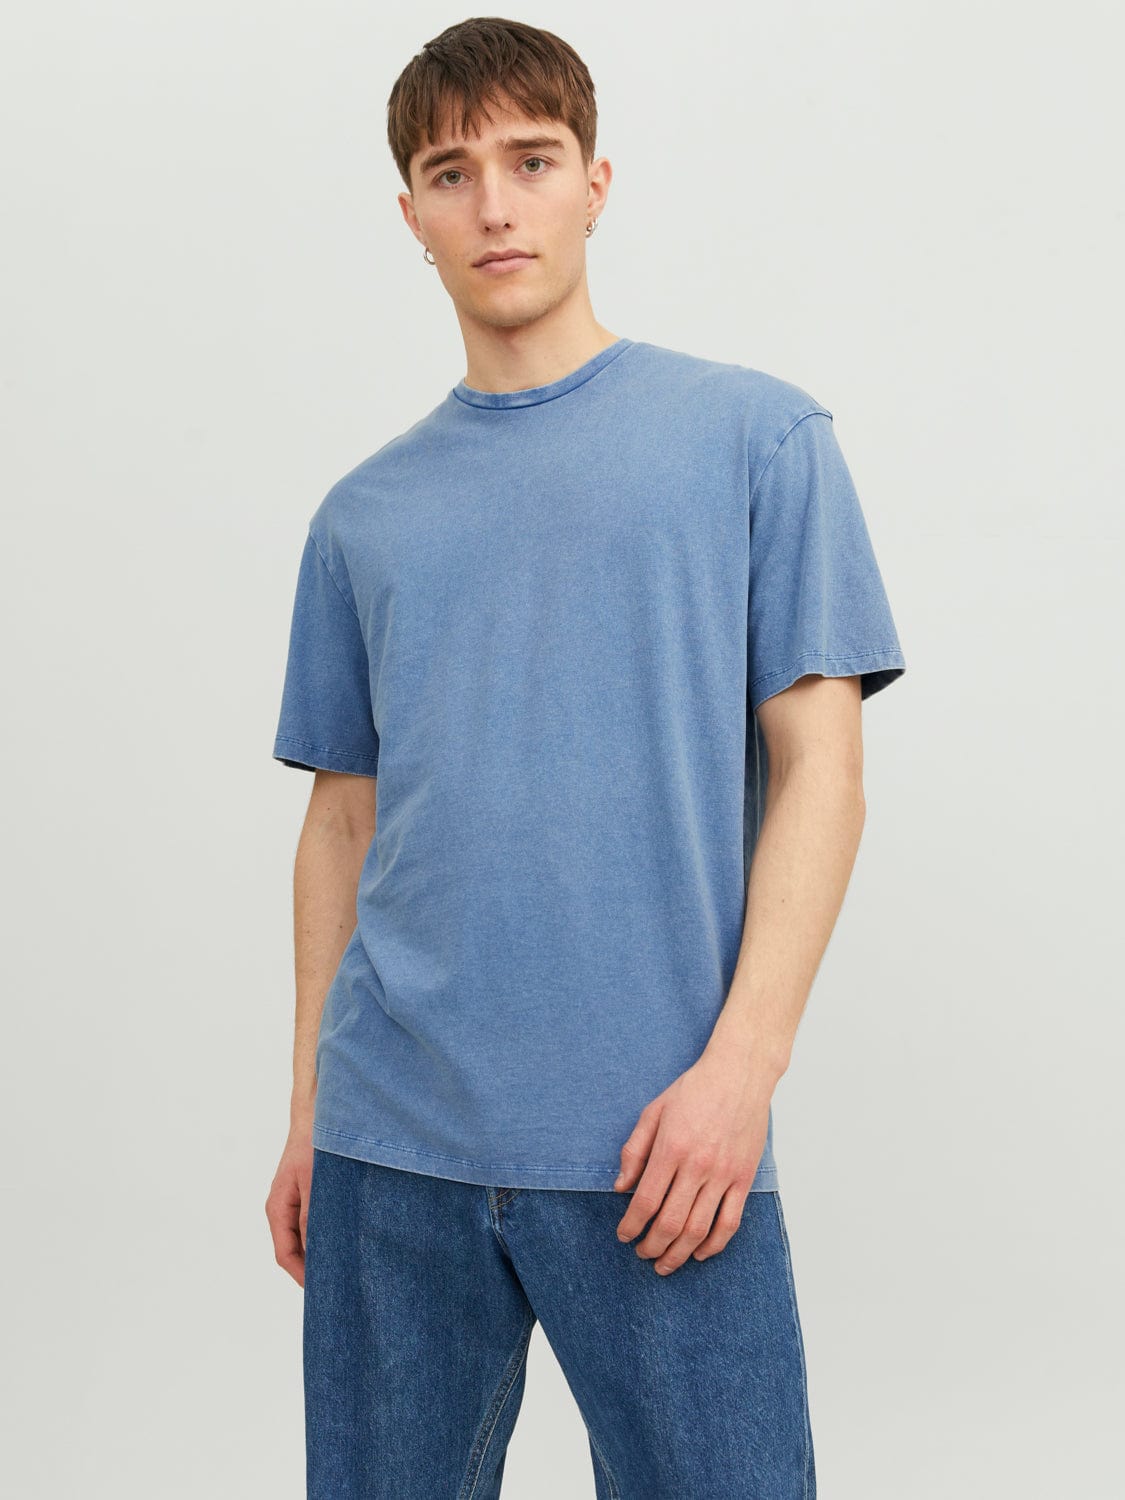 Camiseta básica de manga corta azul- JJEDREW